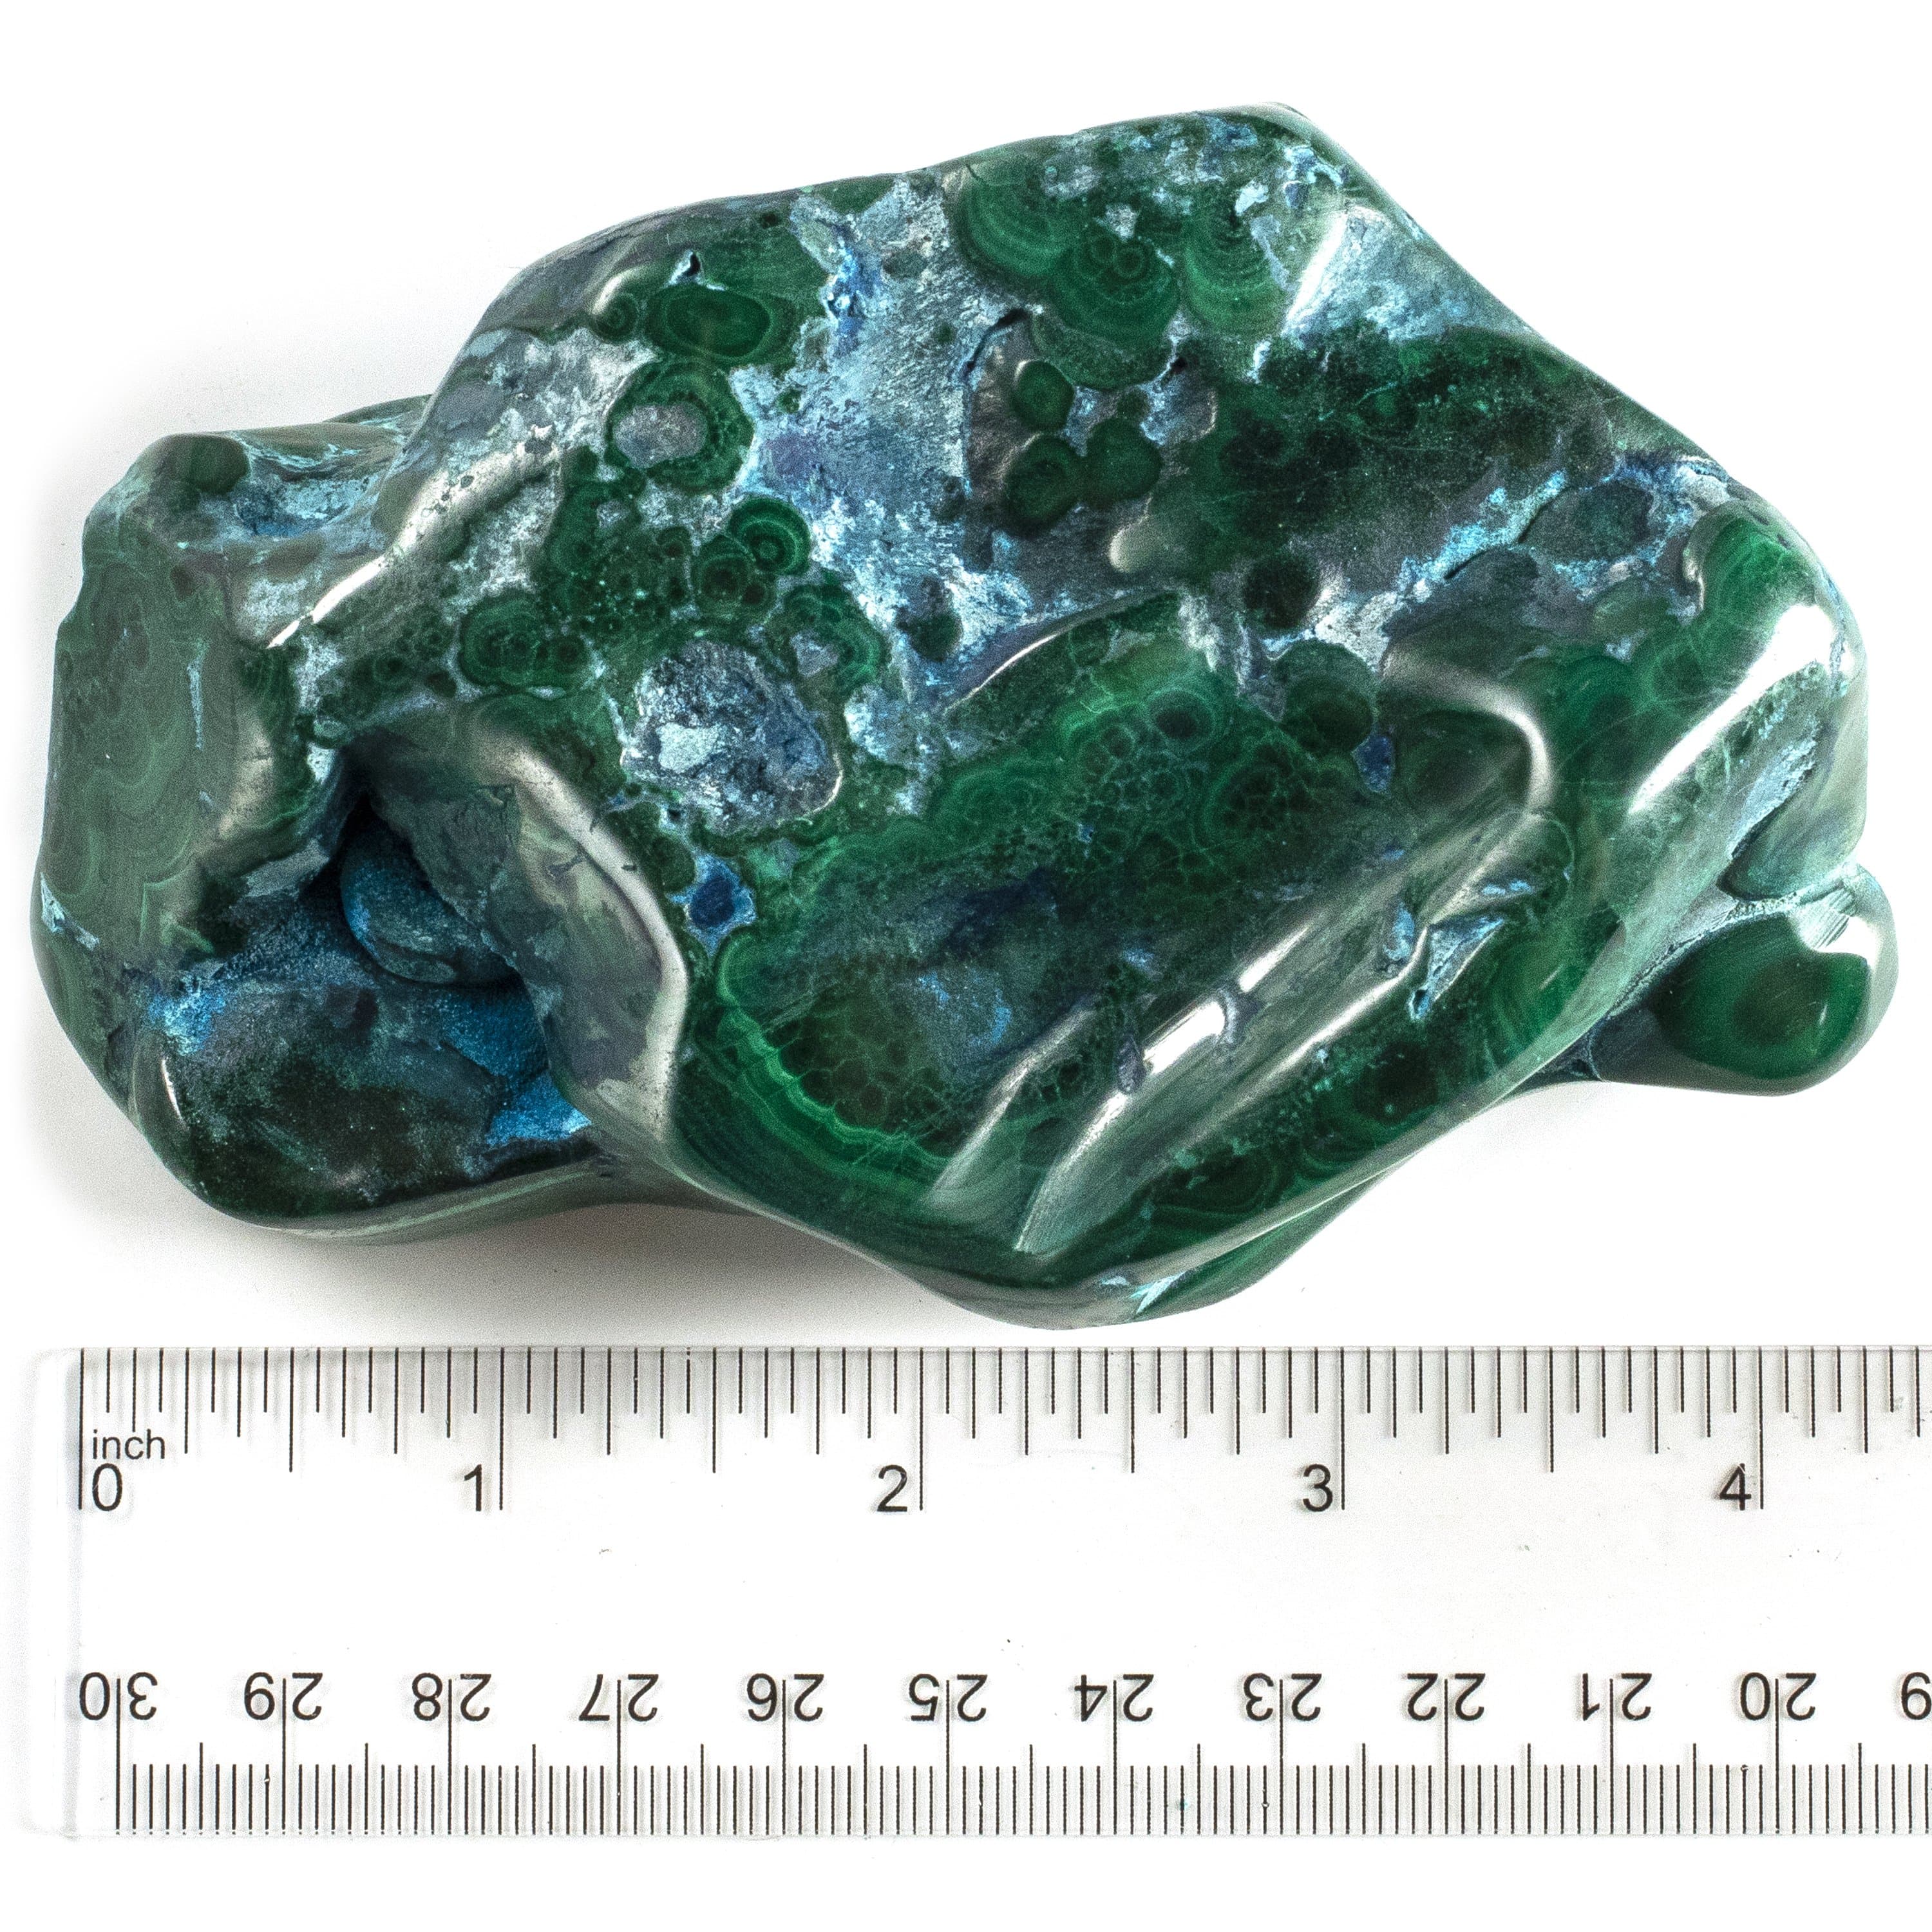 Kalifano Malachite Rare Natural Green Malachite with Blue Chrysocolla Freeform Specimen from Congo - 499 g / 1.1 lbs MAC500.003